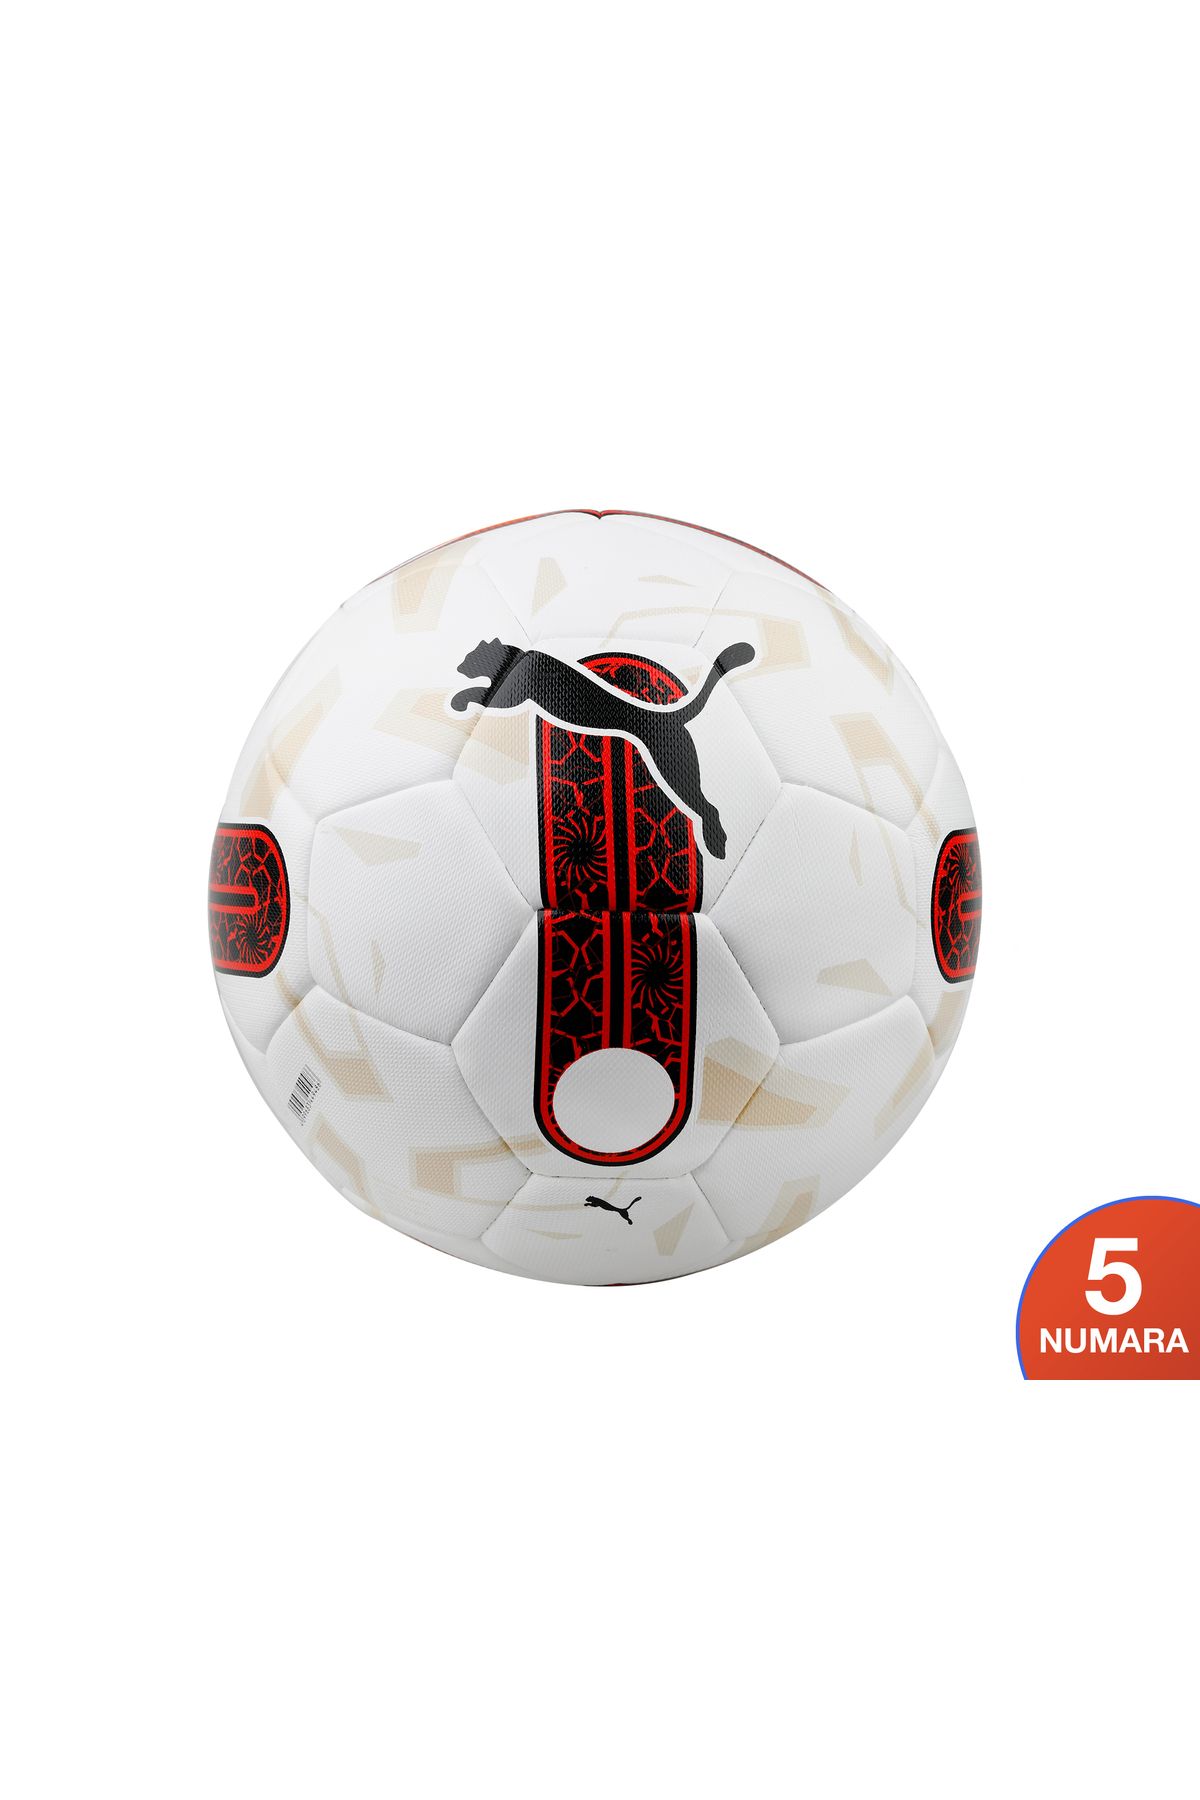 Puma Orbita Süper Lig 4 (Fifa Basic) Süper Lig Futbol Topu